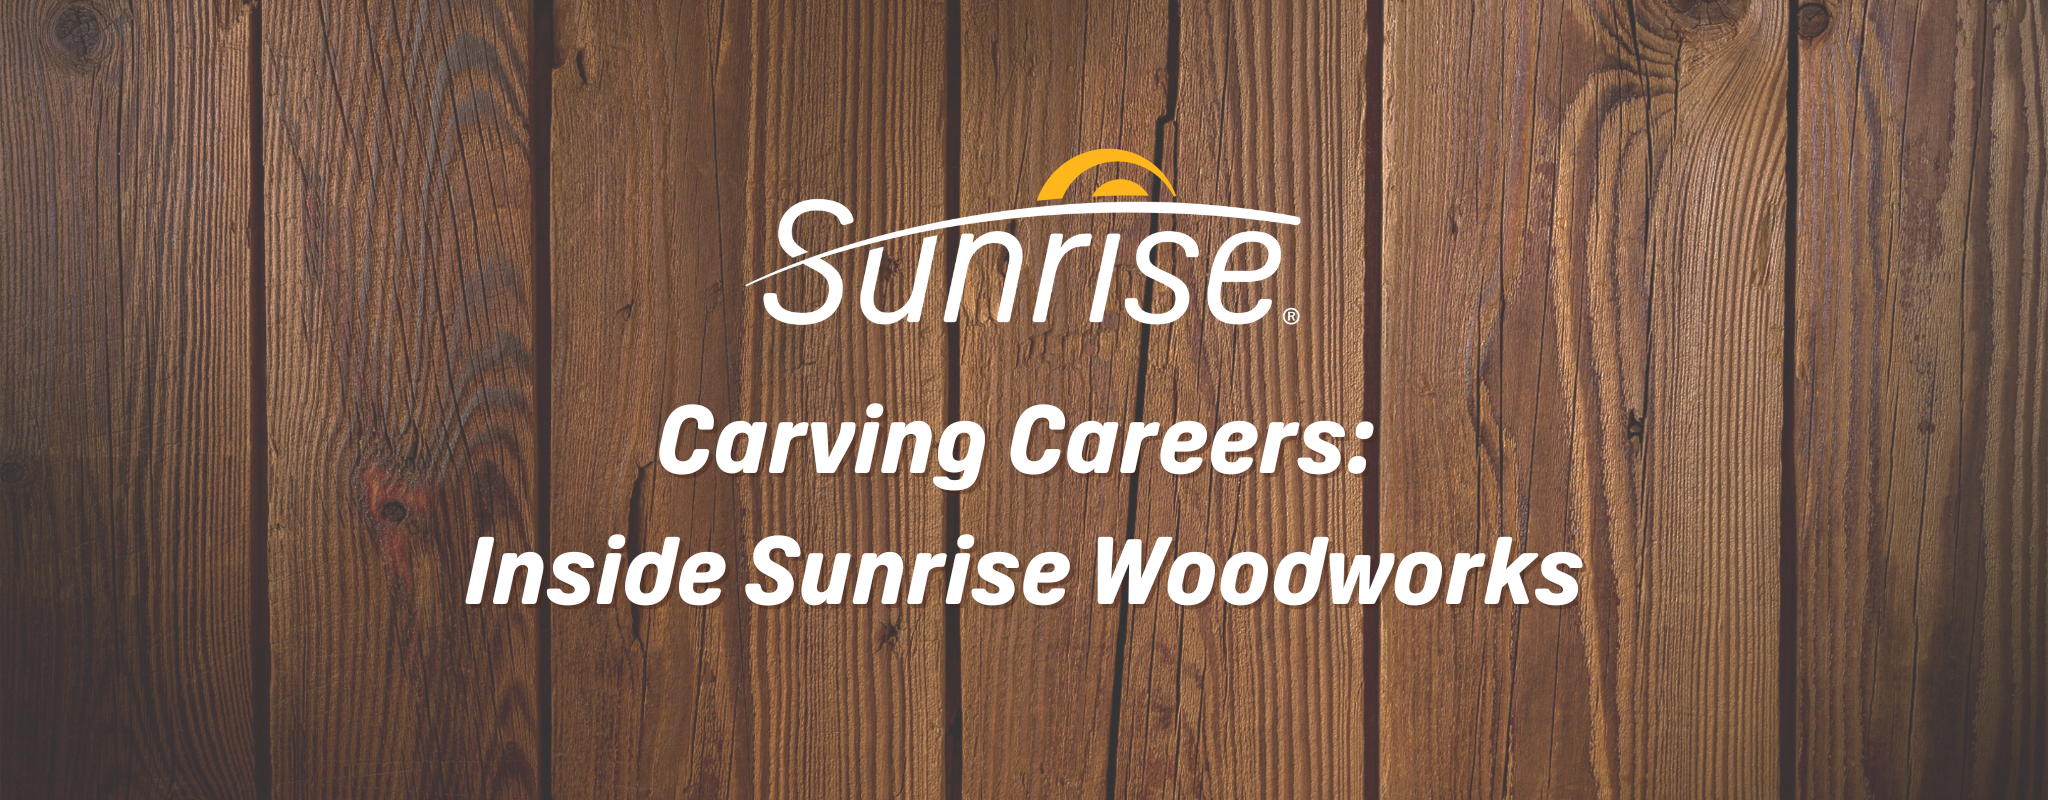 Carving Careers: Inside Sunrise Woodworks